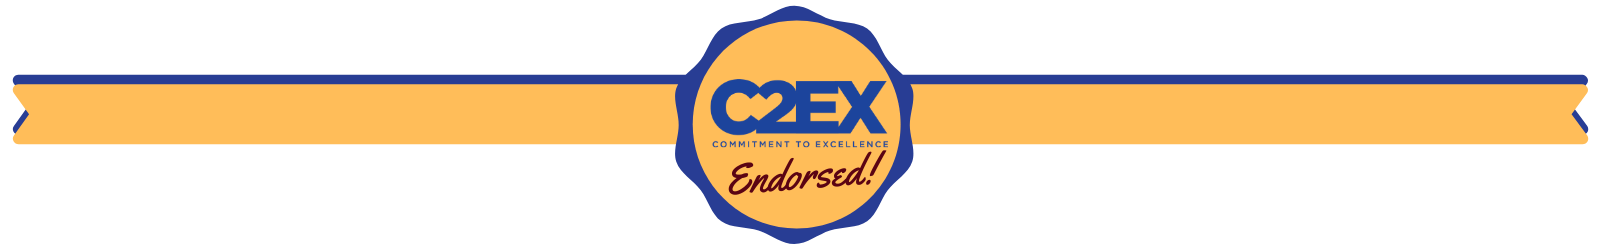 C2EX Banner